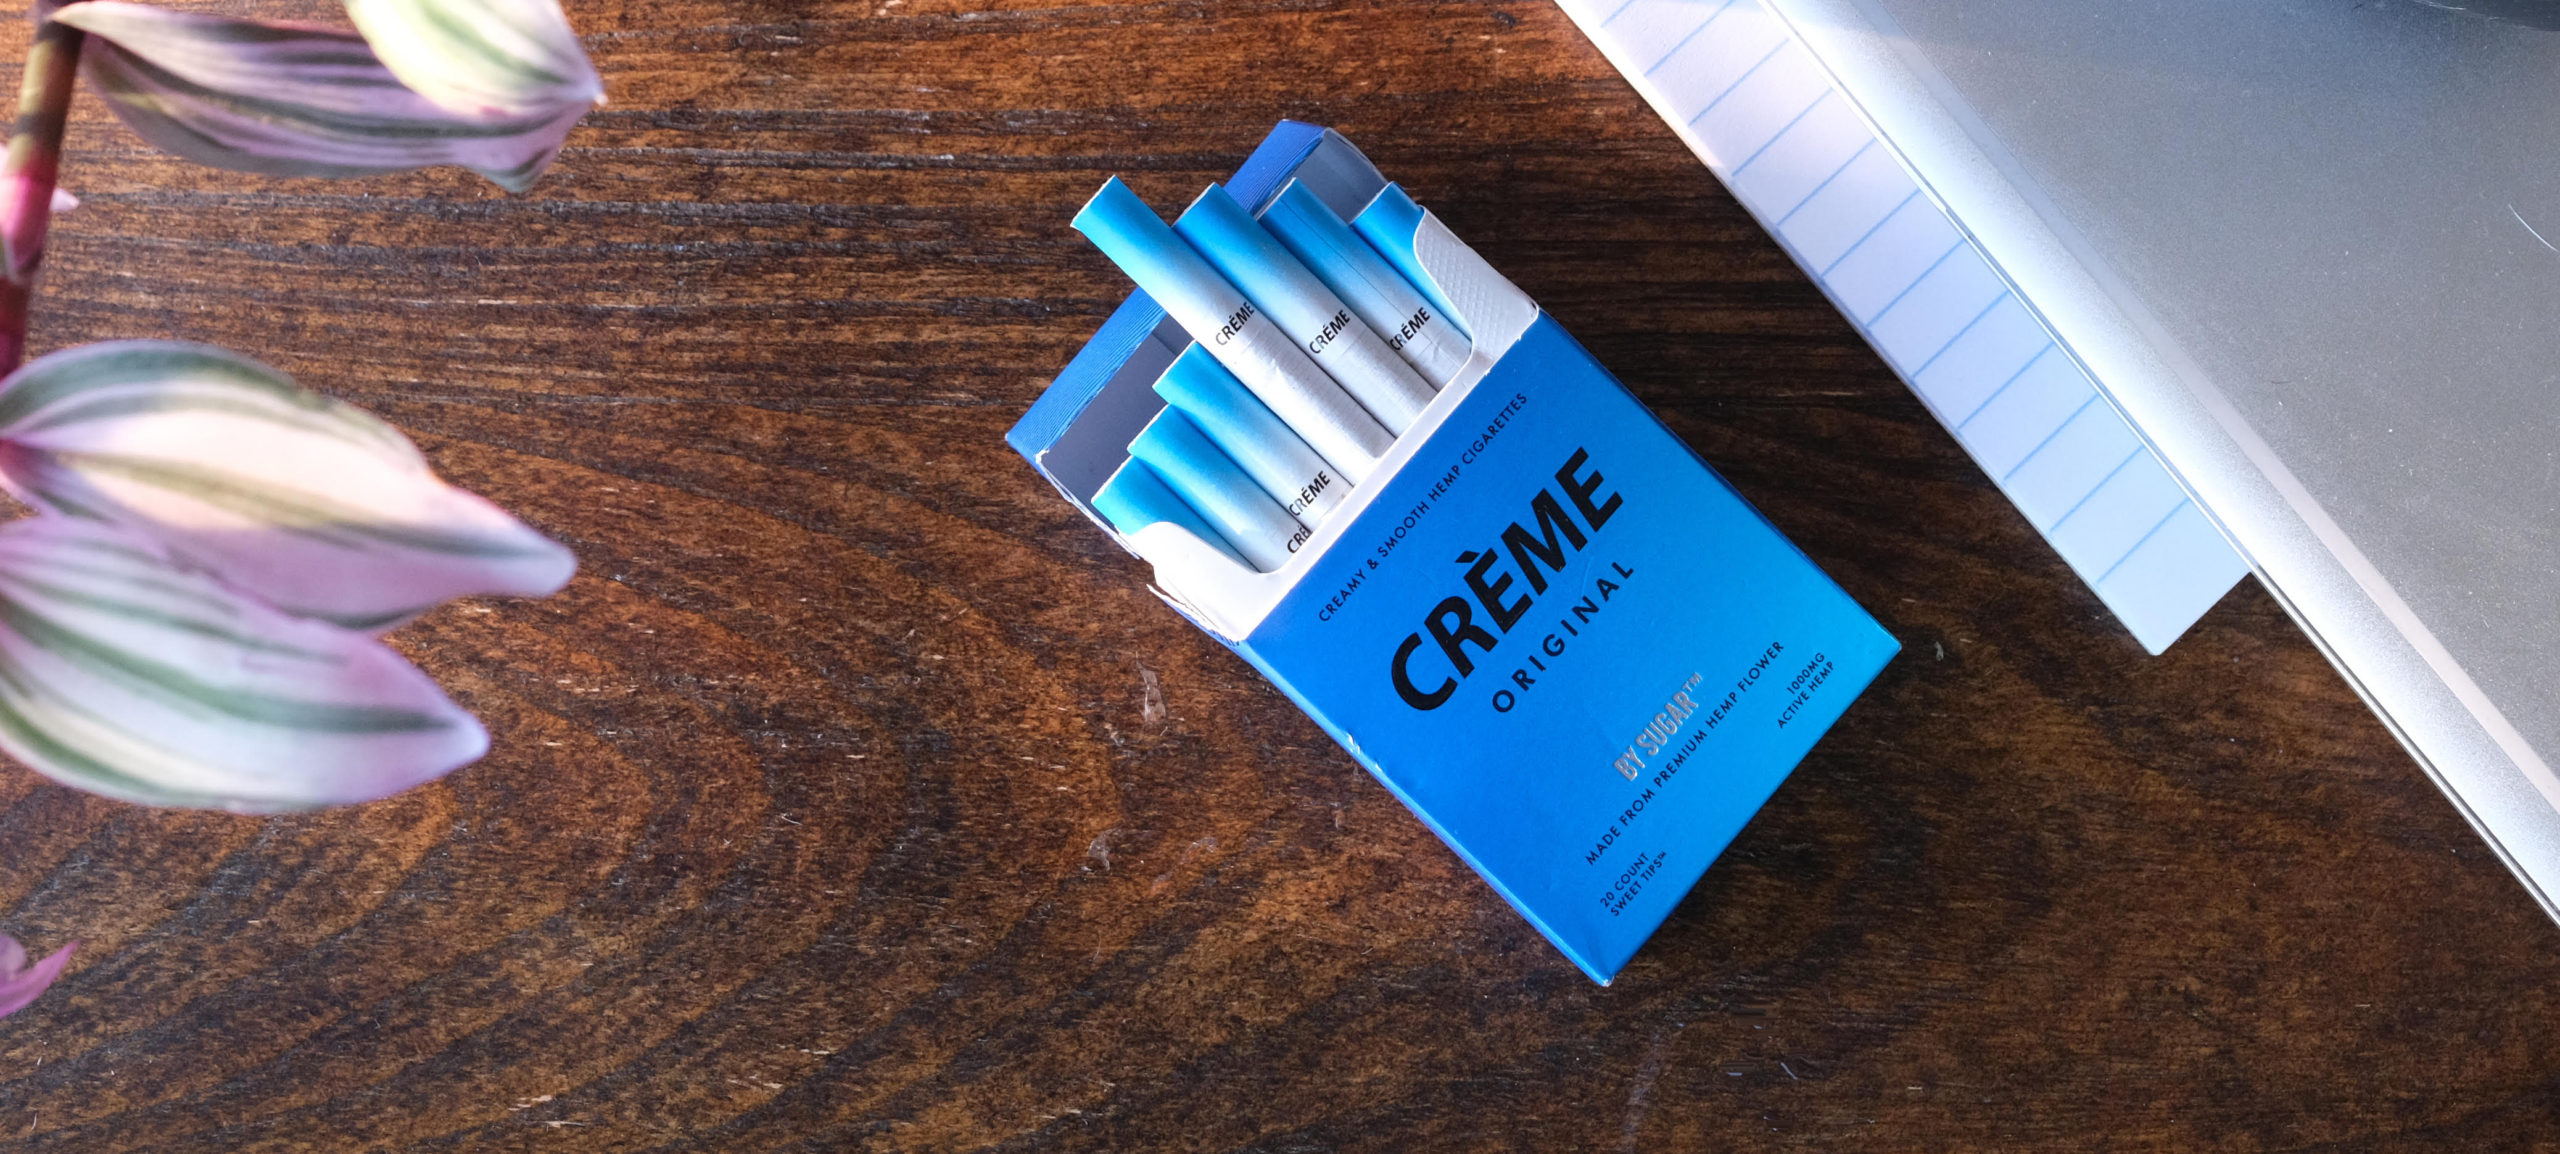 Crème by Sugar, The best Hemp Cigarette? | Global CBD Oils